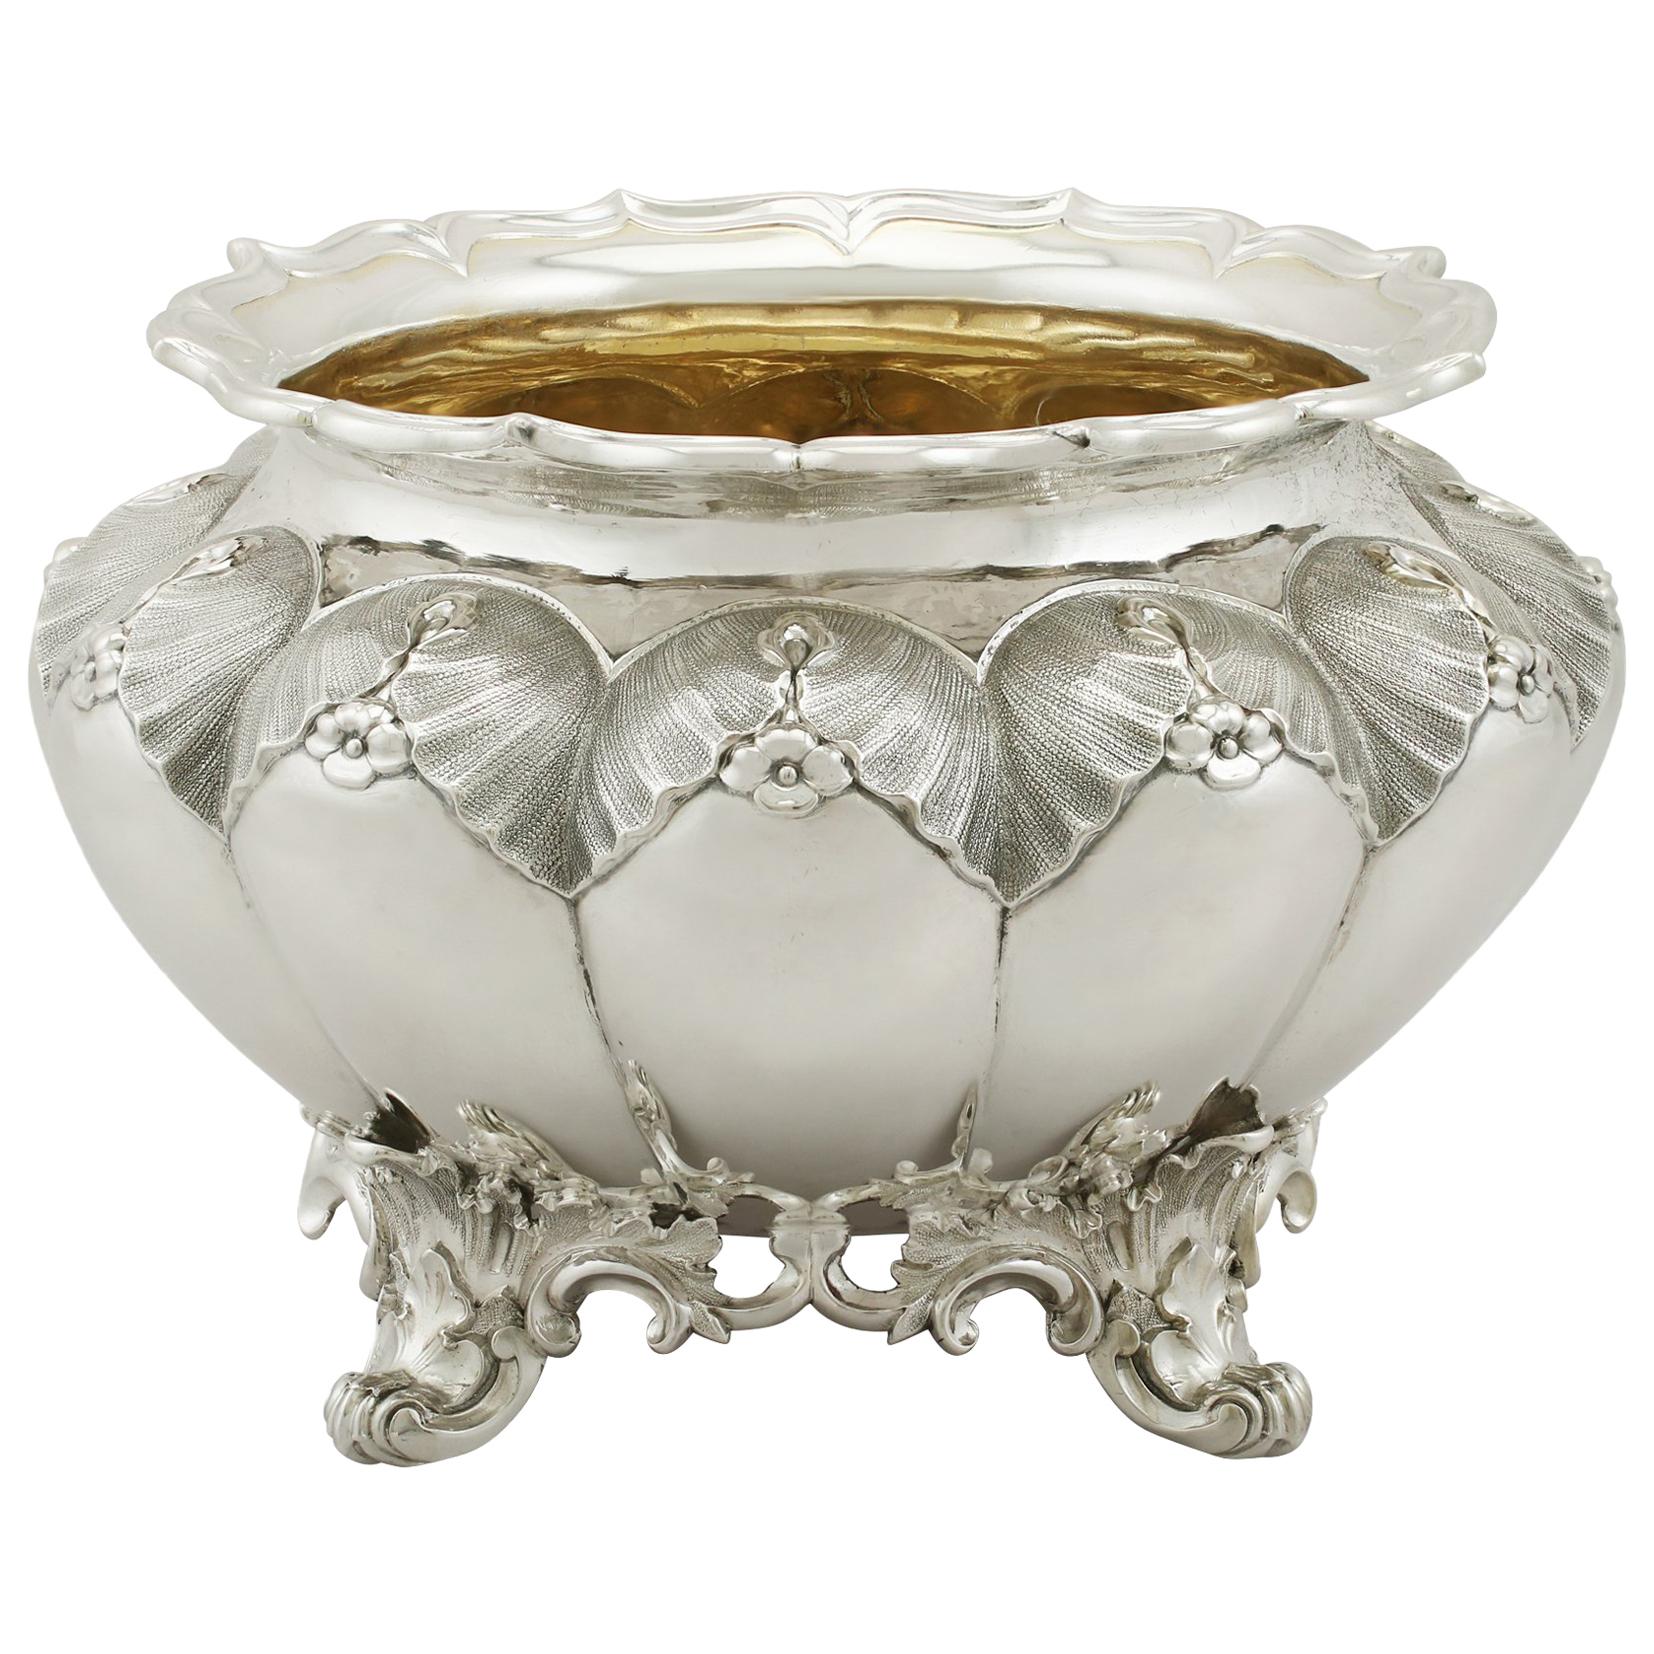 Antique William IV Sterling Silver Slop Bowl, 1835